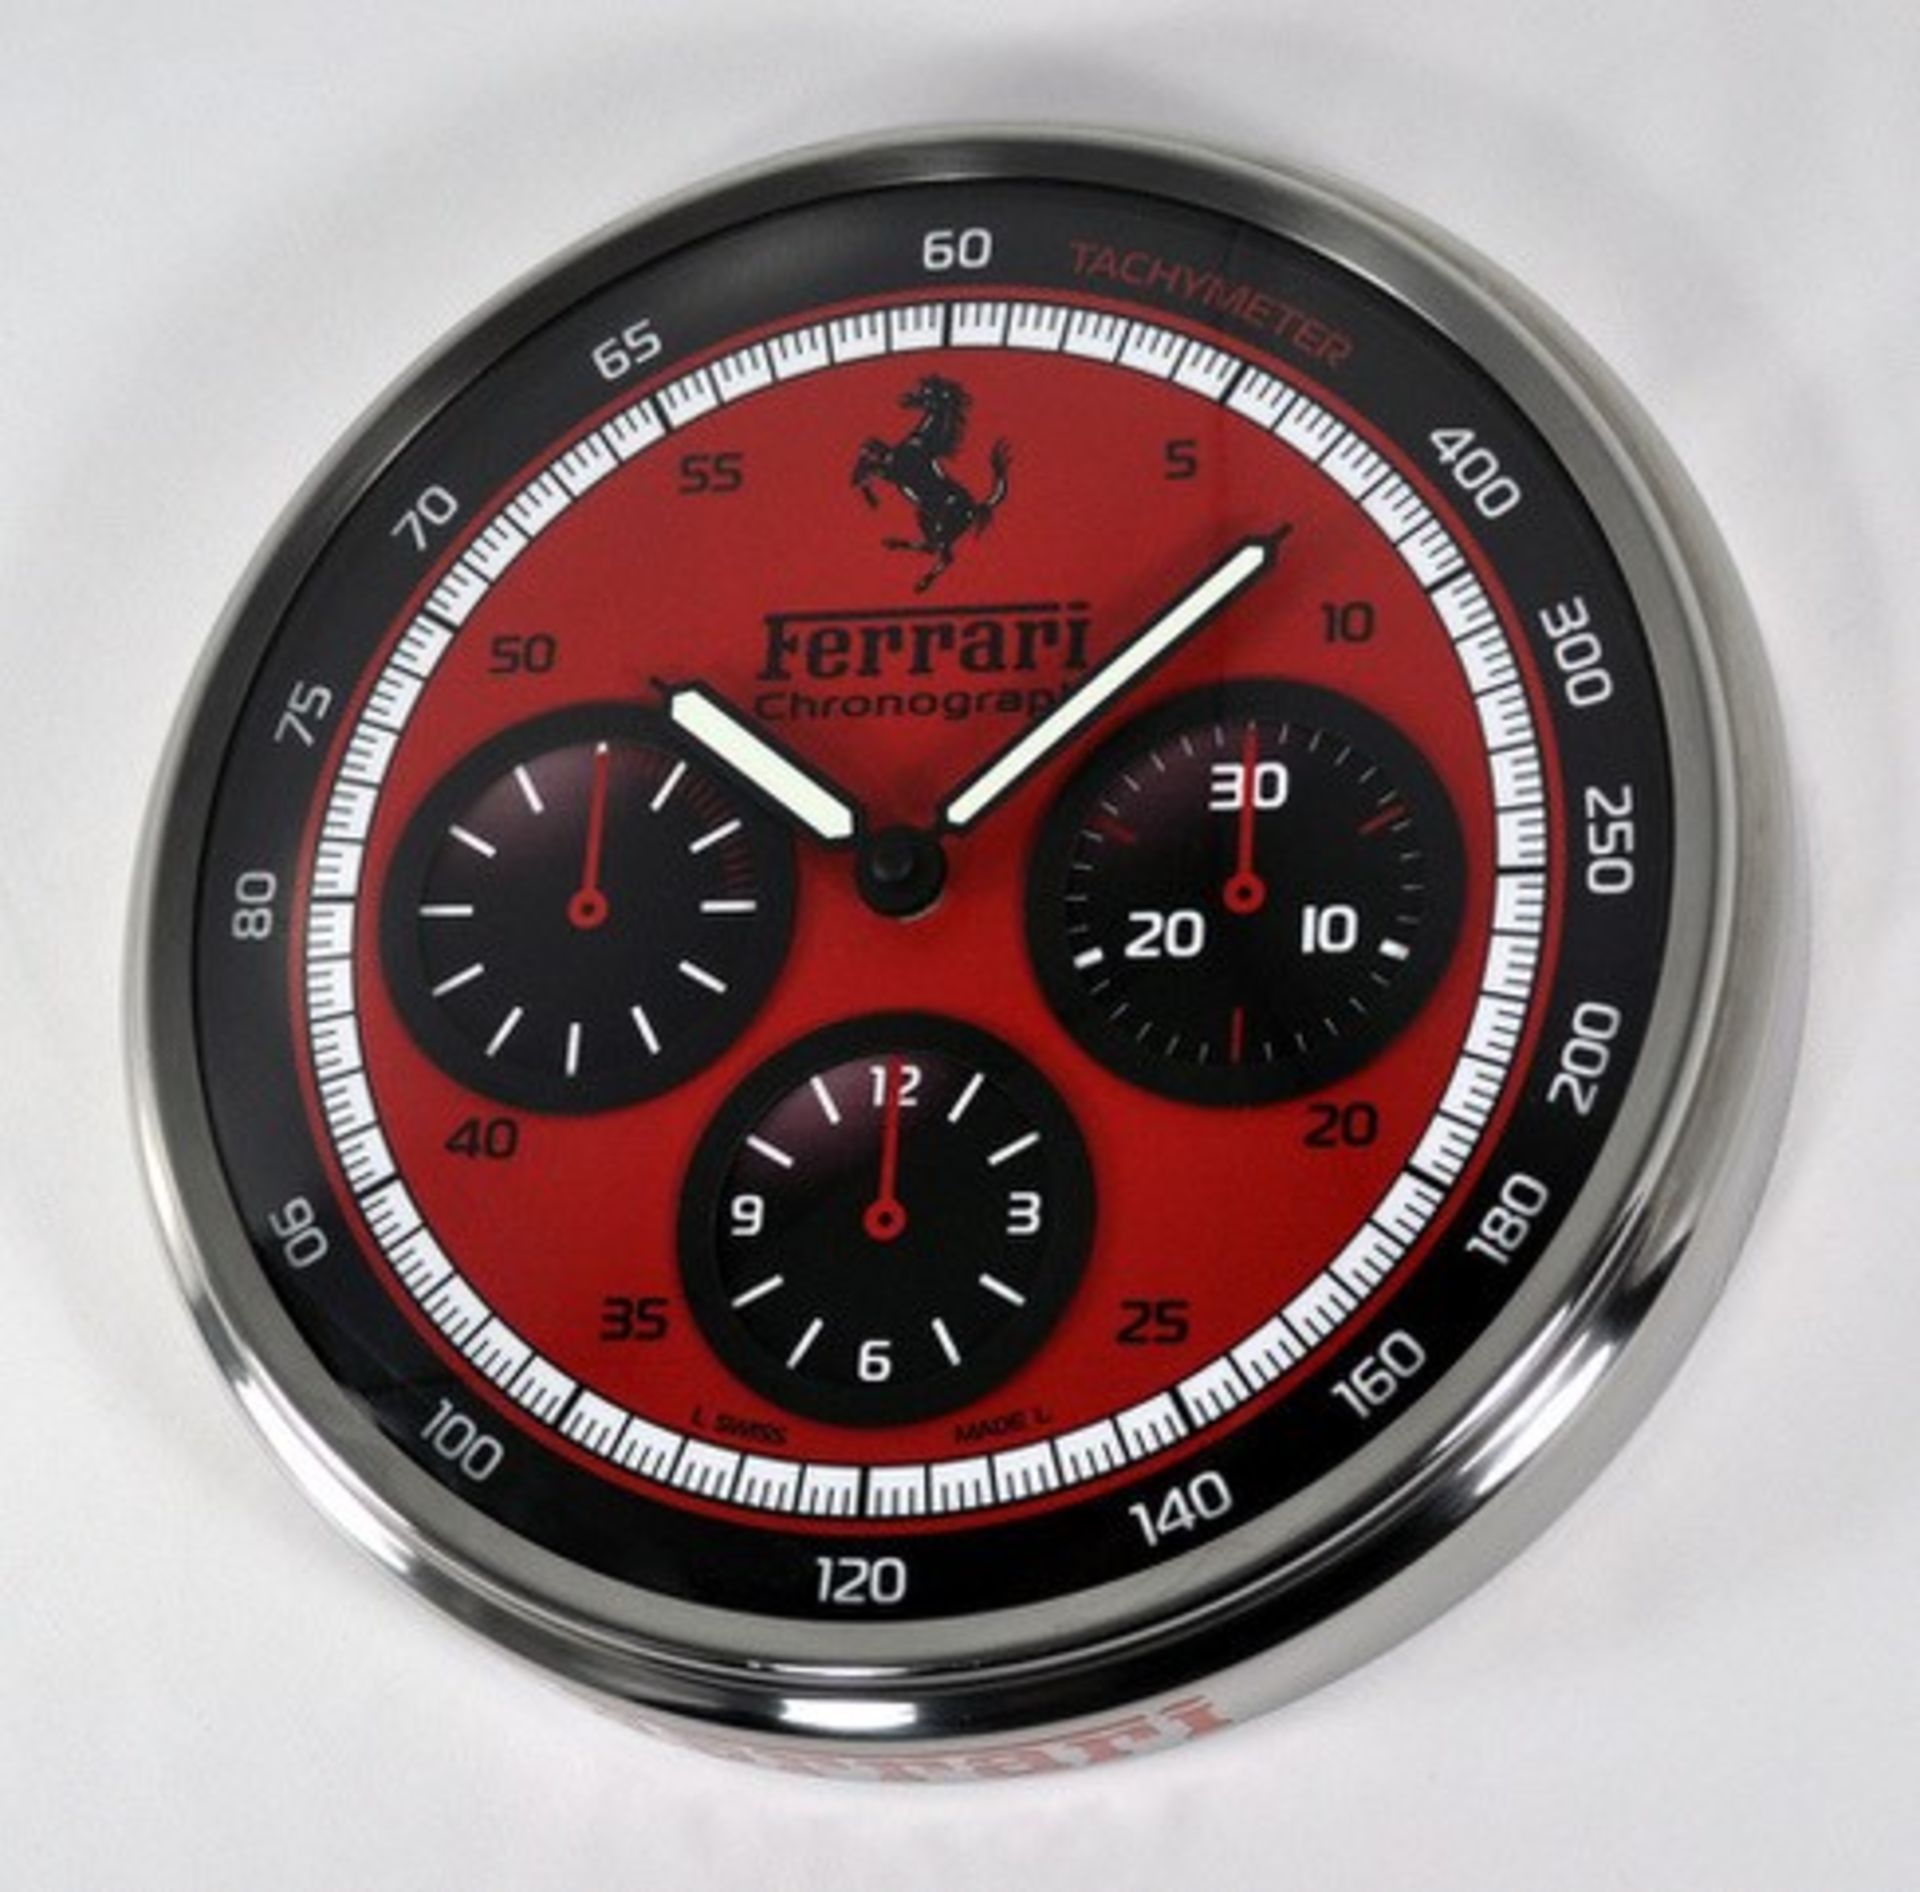 Panerai Dealer's Clock 'Ferrari Red Dial'